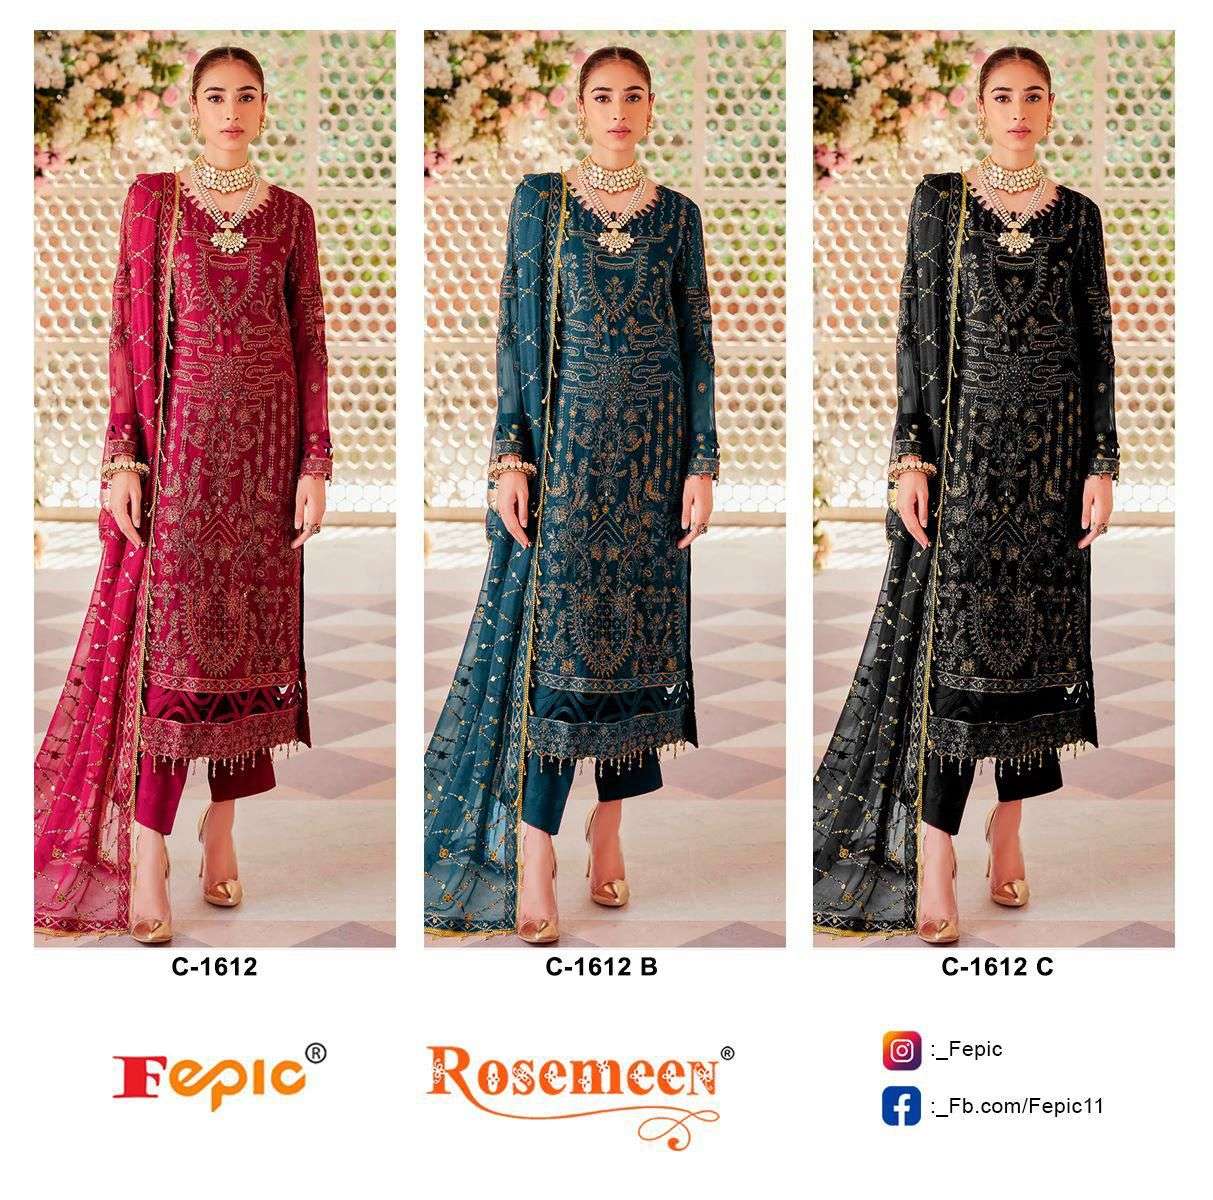 fepic rosemeen 1612 colour series latest designer pakistani salwar kameez wholesaler surat gujarat